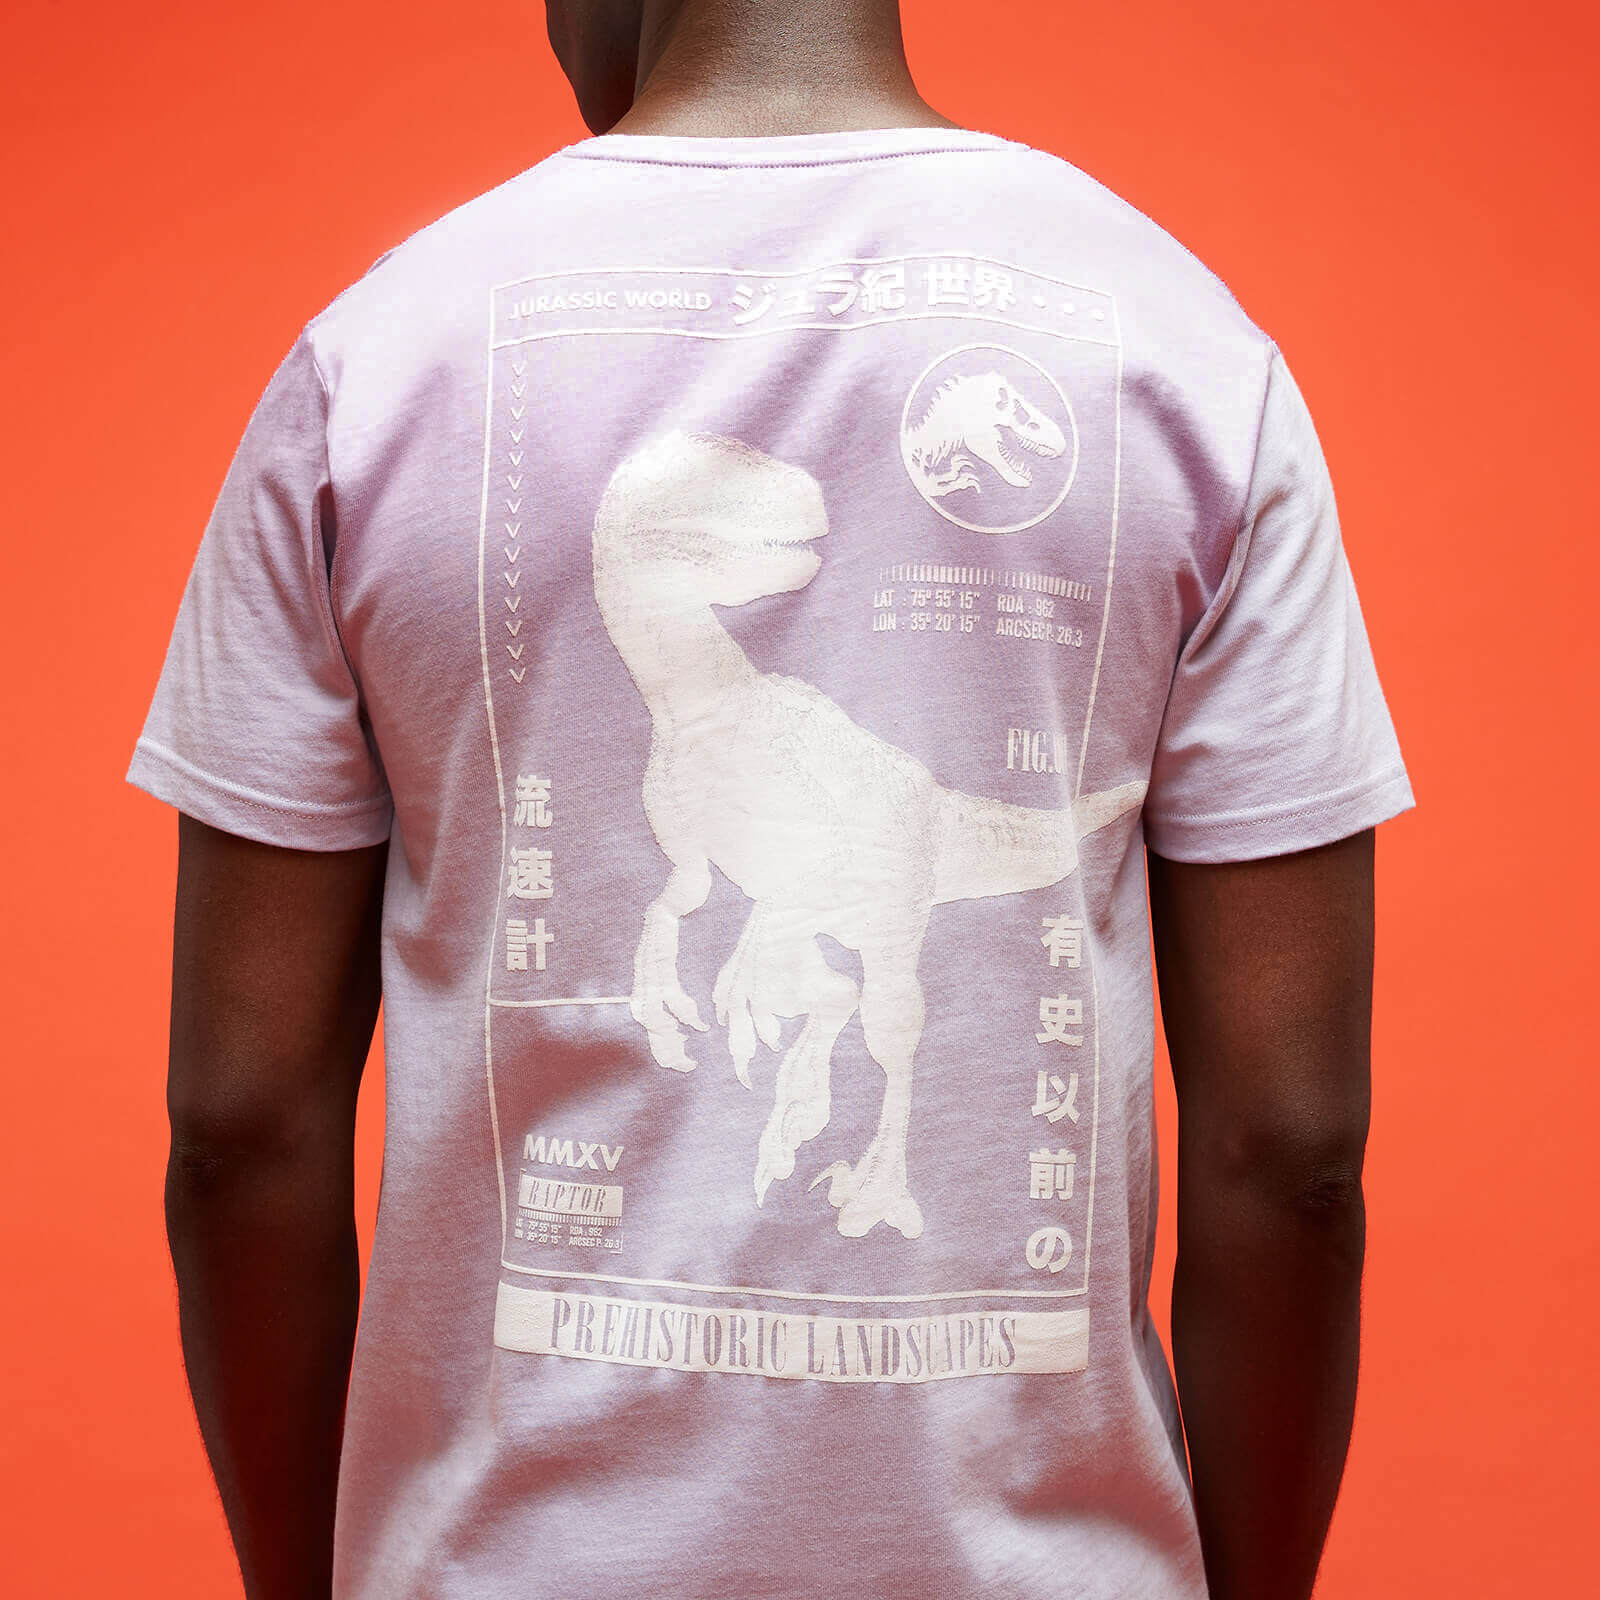 jurassic park primal distressed printed t-shirt - lilac - xs